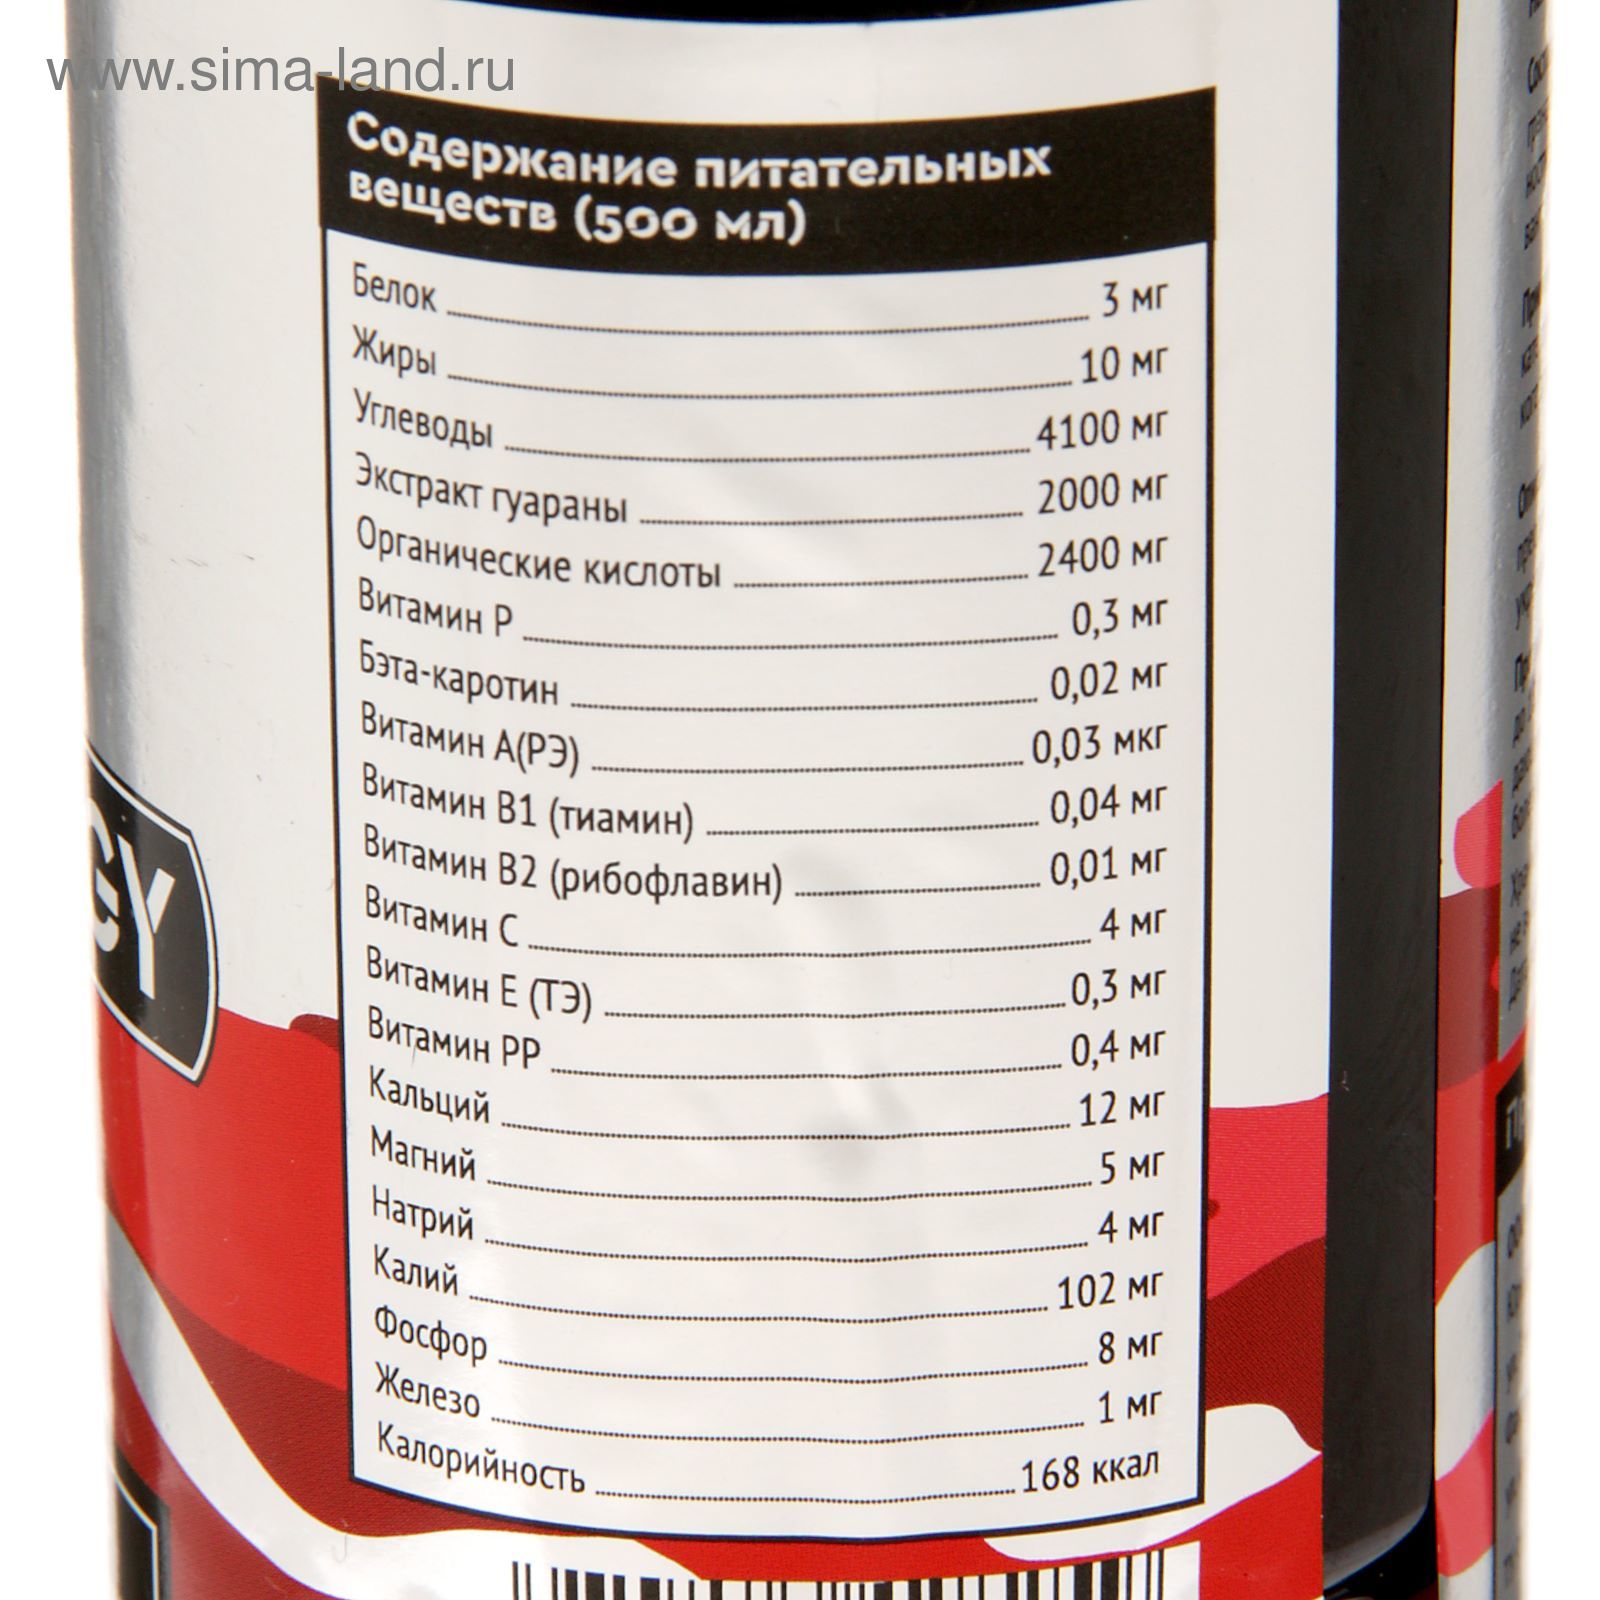 Напиток SportLine Red Energy 2000mg 500ml (Гранат)